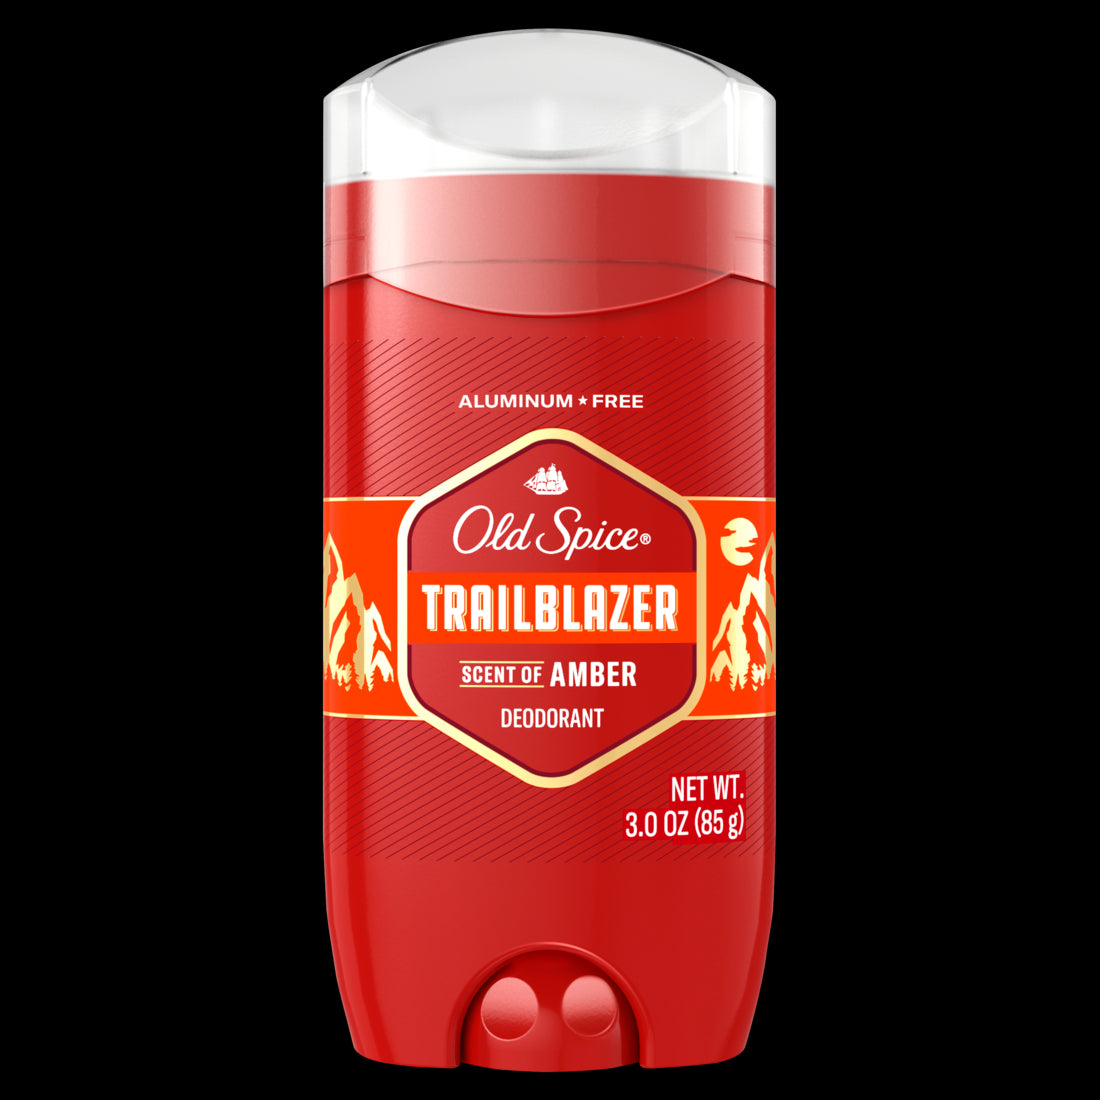 Old Spice Red Collection Deodorant For Men Aluminum Free Trailblazer Scent -3oz/12pk